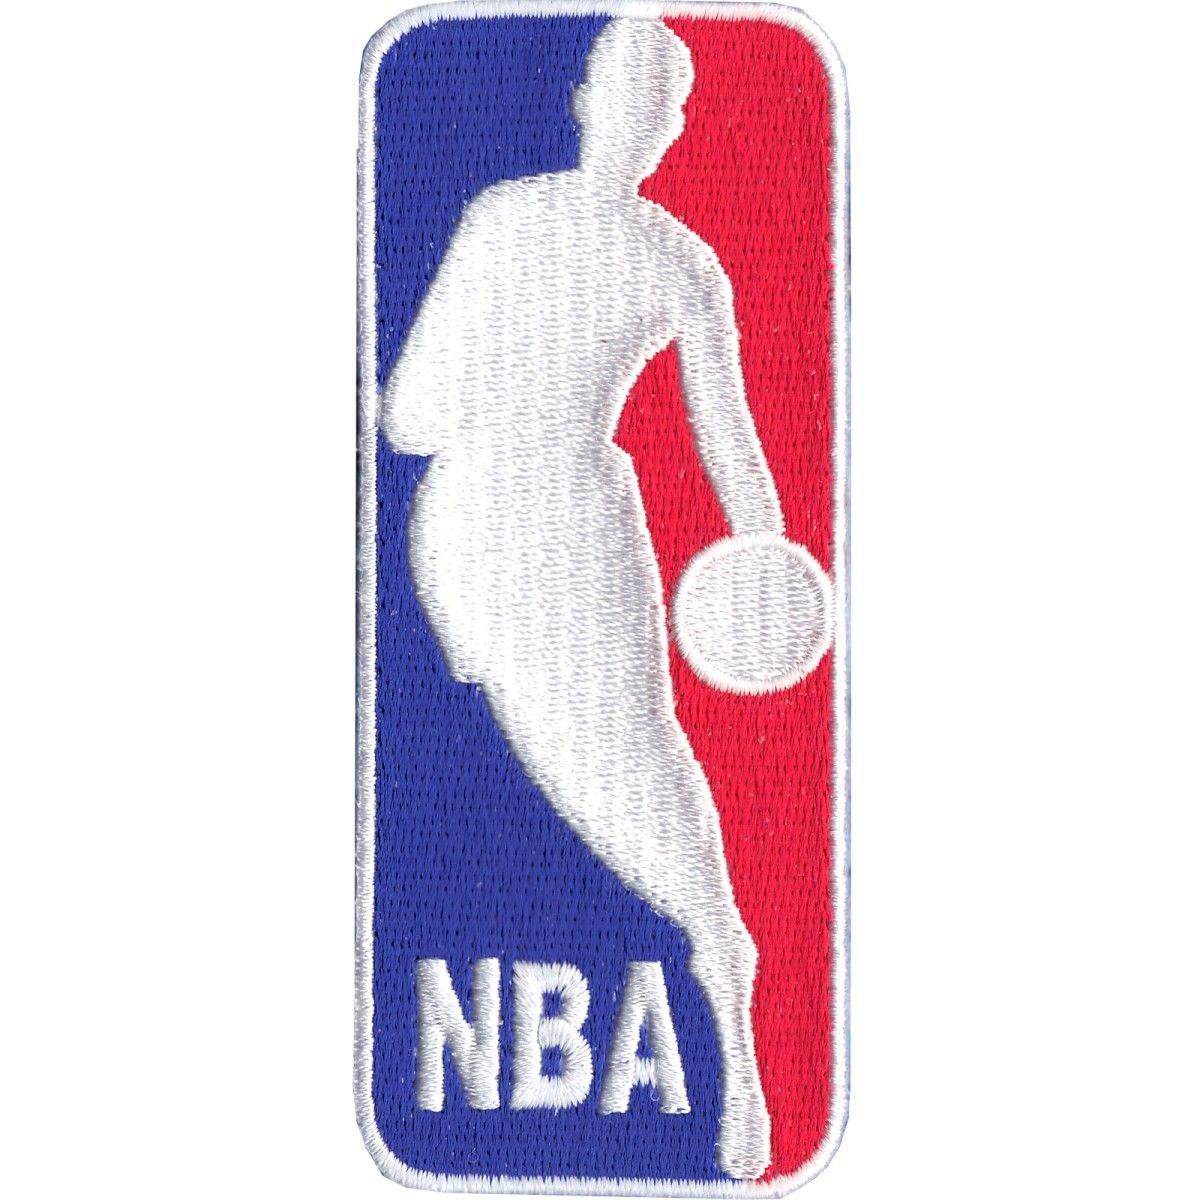 Basketball League Logo - Official NBA Basketball League Large Logo 'Jerry West'